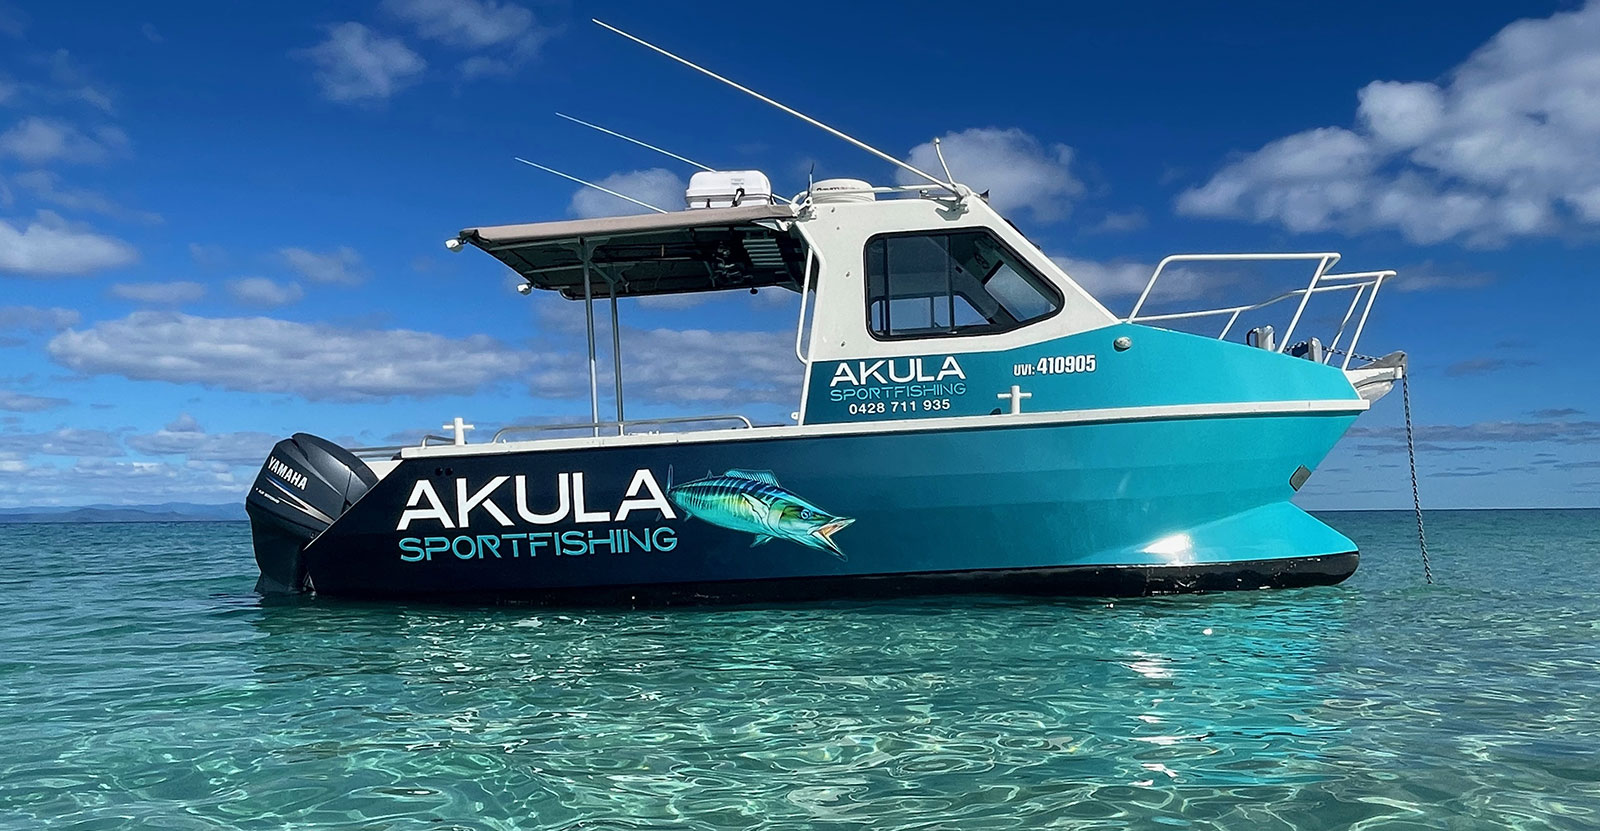 Akula boat in shallow water